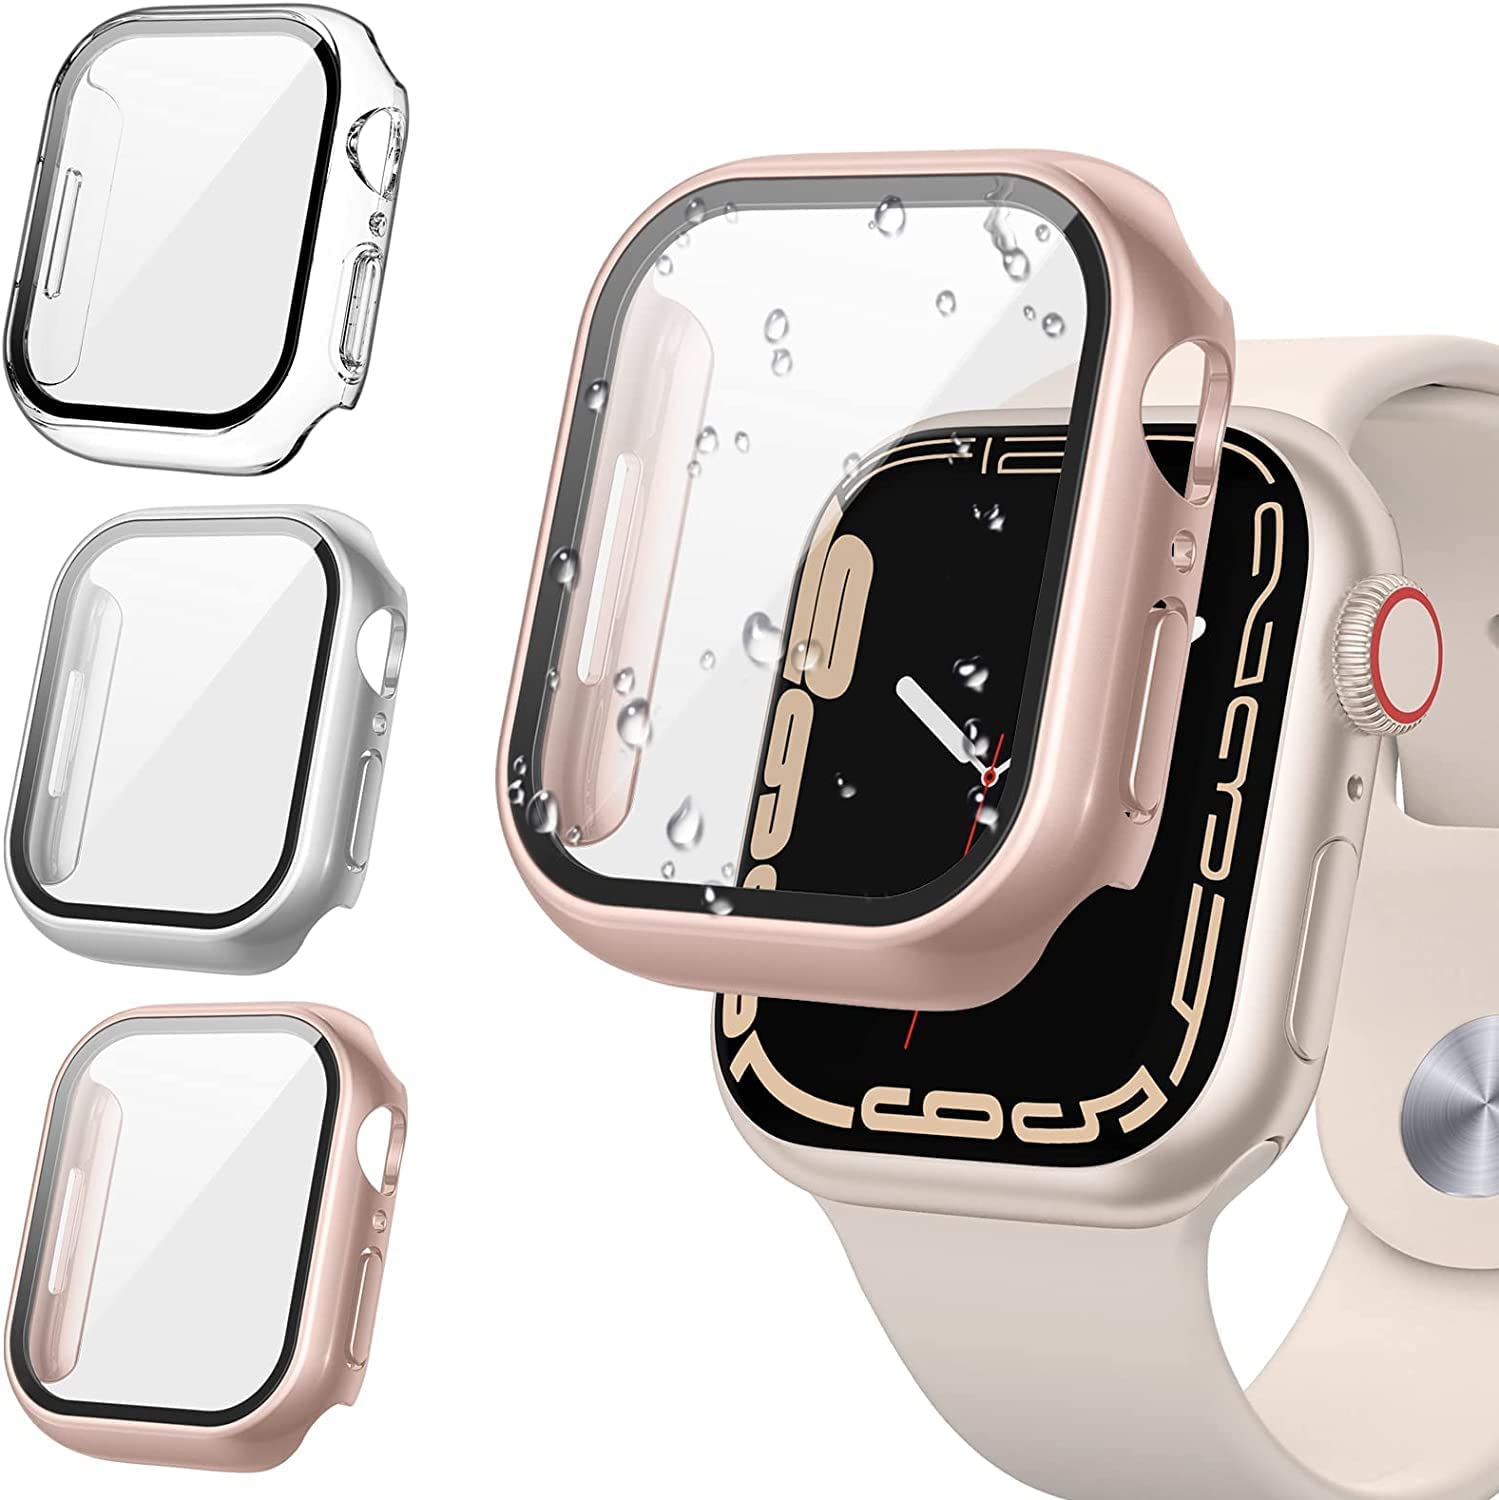 [3Pack] Tensa for Apple Watch 스크린 프로텍터 케이스 시리즈 8741mm, 아이워치 프로텍션 페이스 커버, 강화유리 필름 하드 PC 범퍼, 여성용 초박형 가드 (41mm, 클리어/실버/로즈골드)